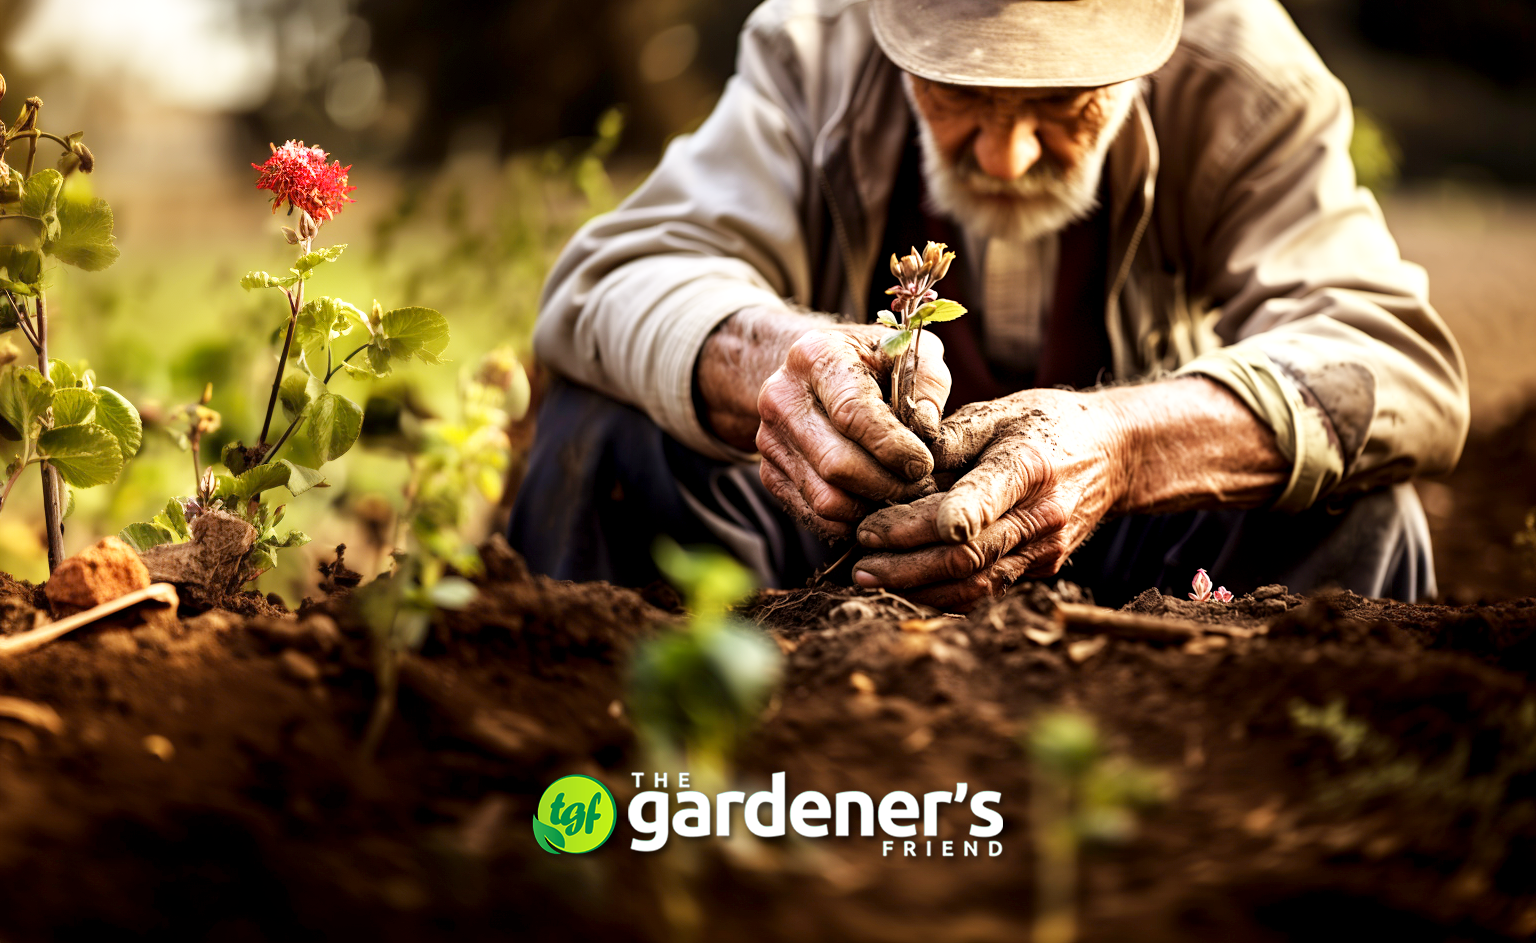 Elderly man with weak hands using The Gardener's Friend tools while gardening.